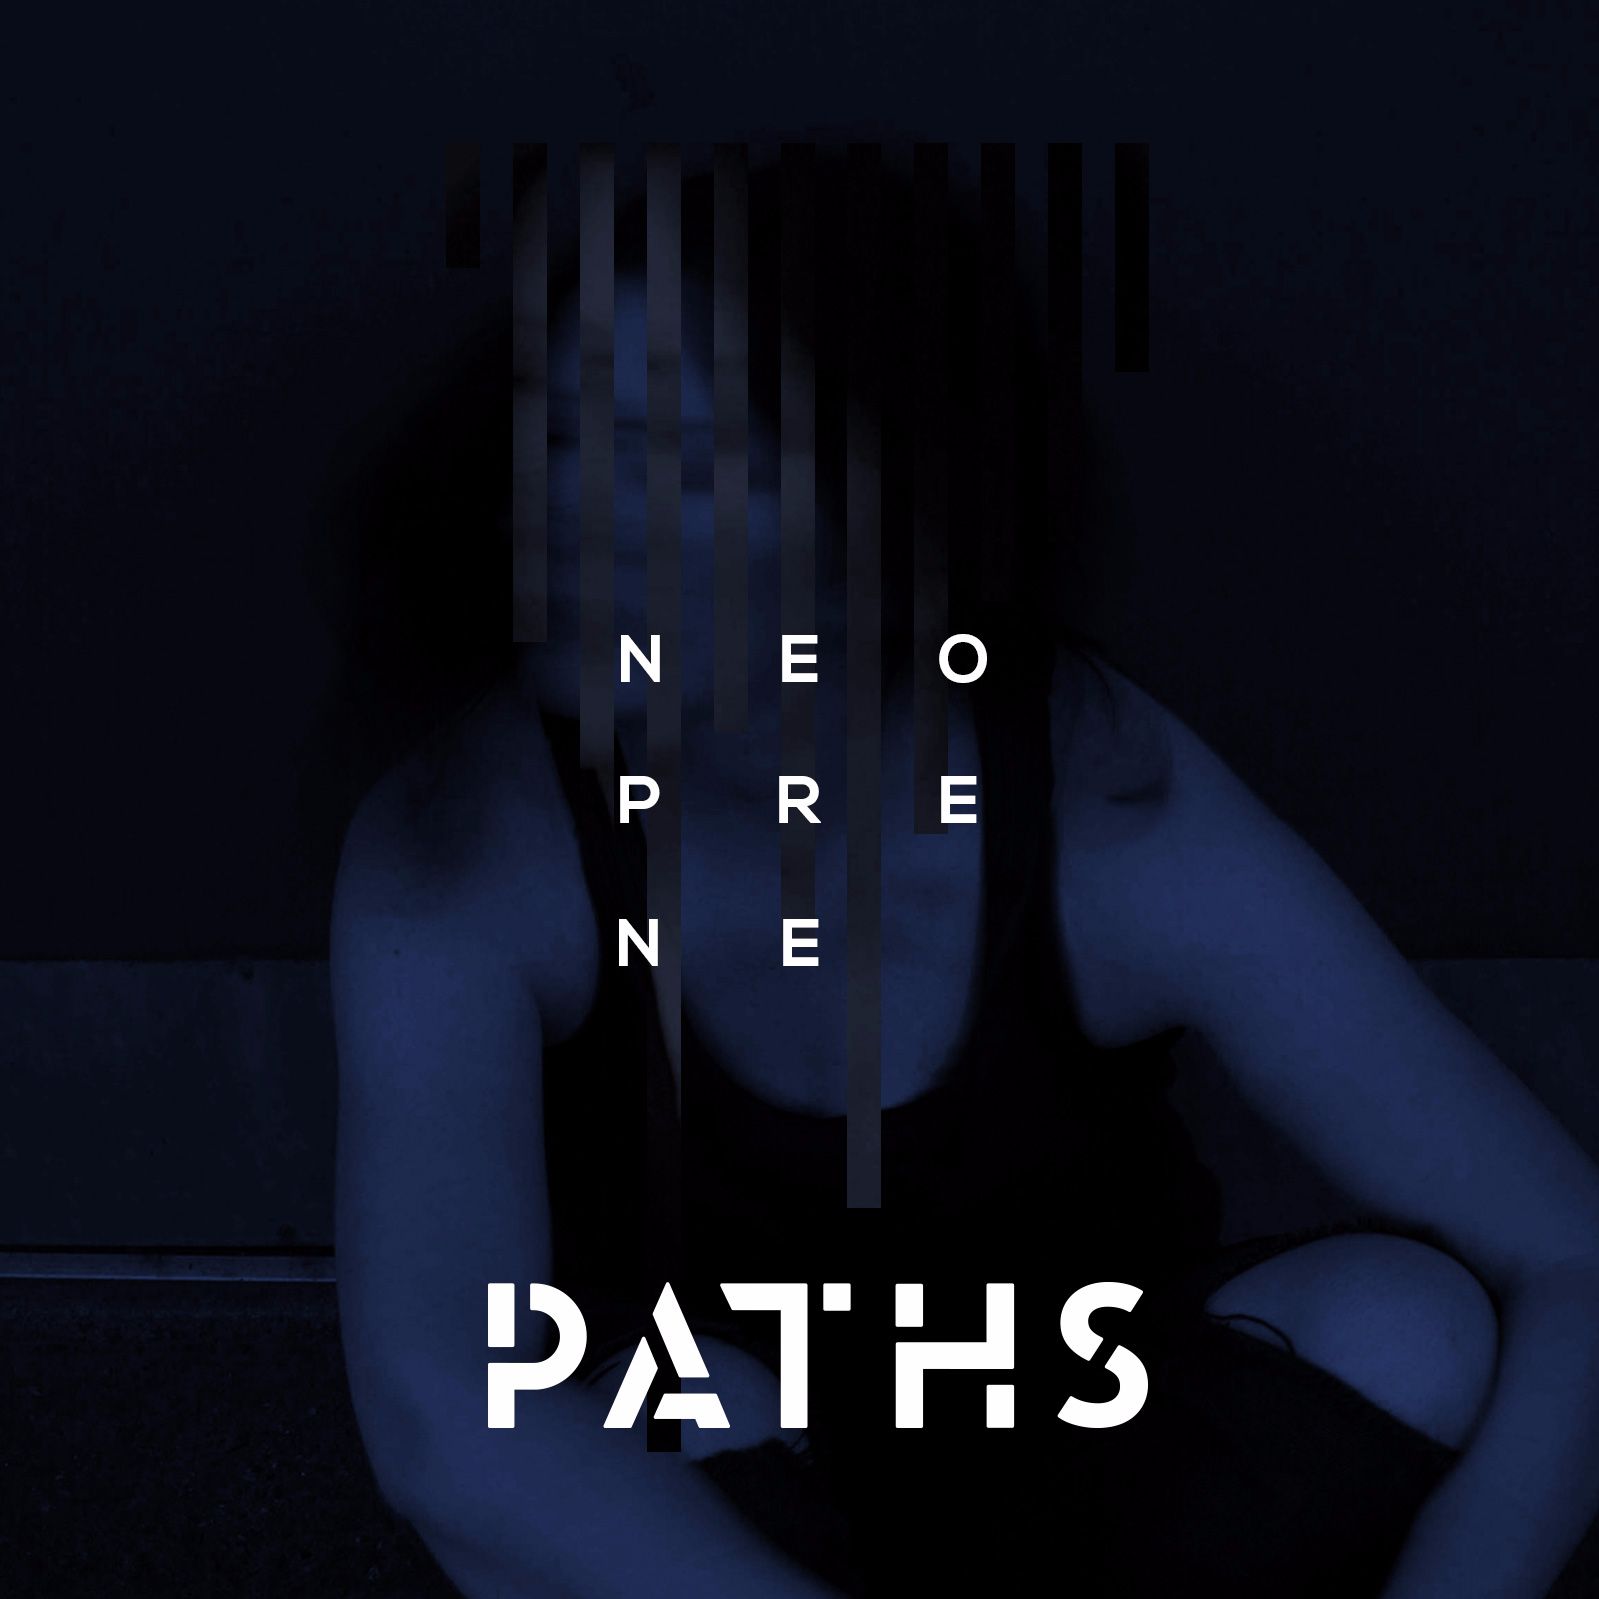 PATHS – “Neoprene”